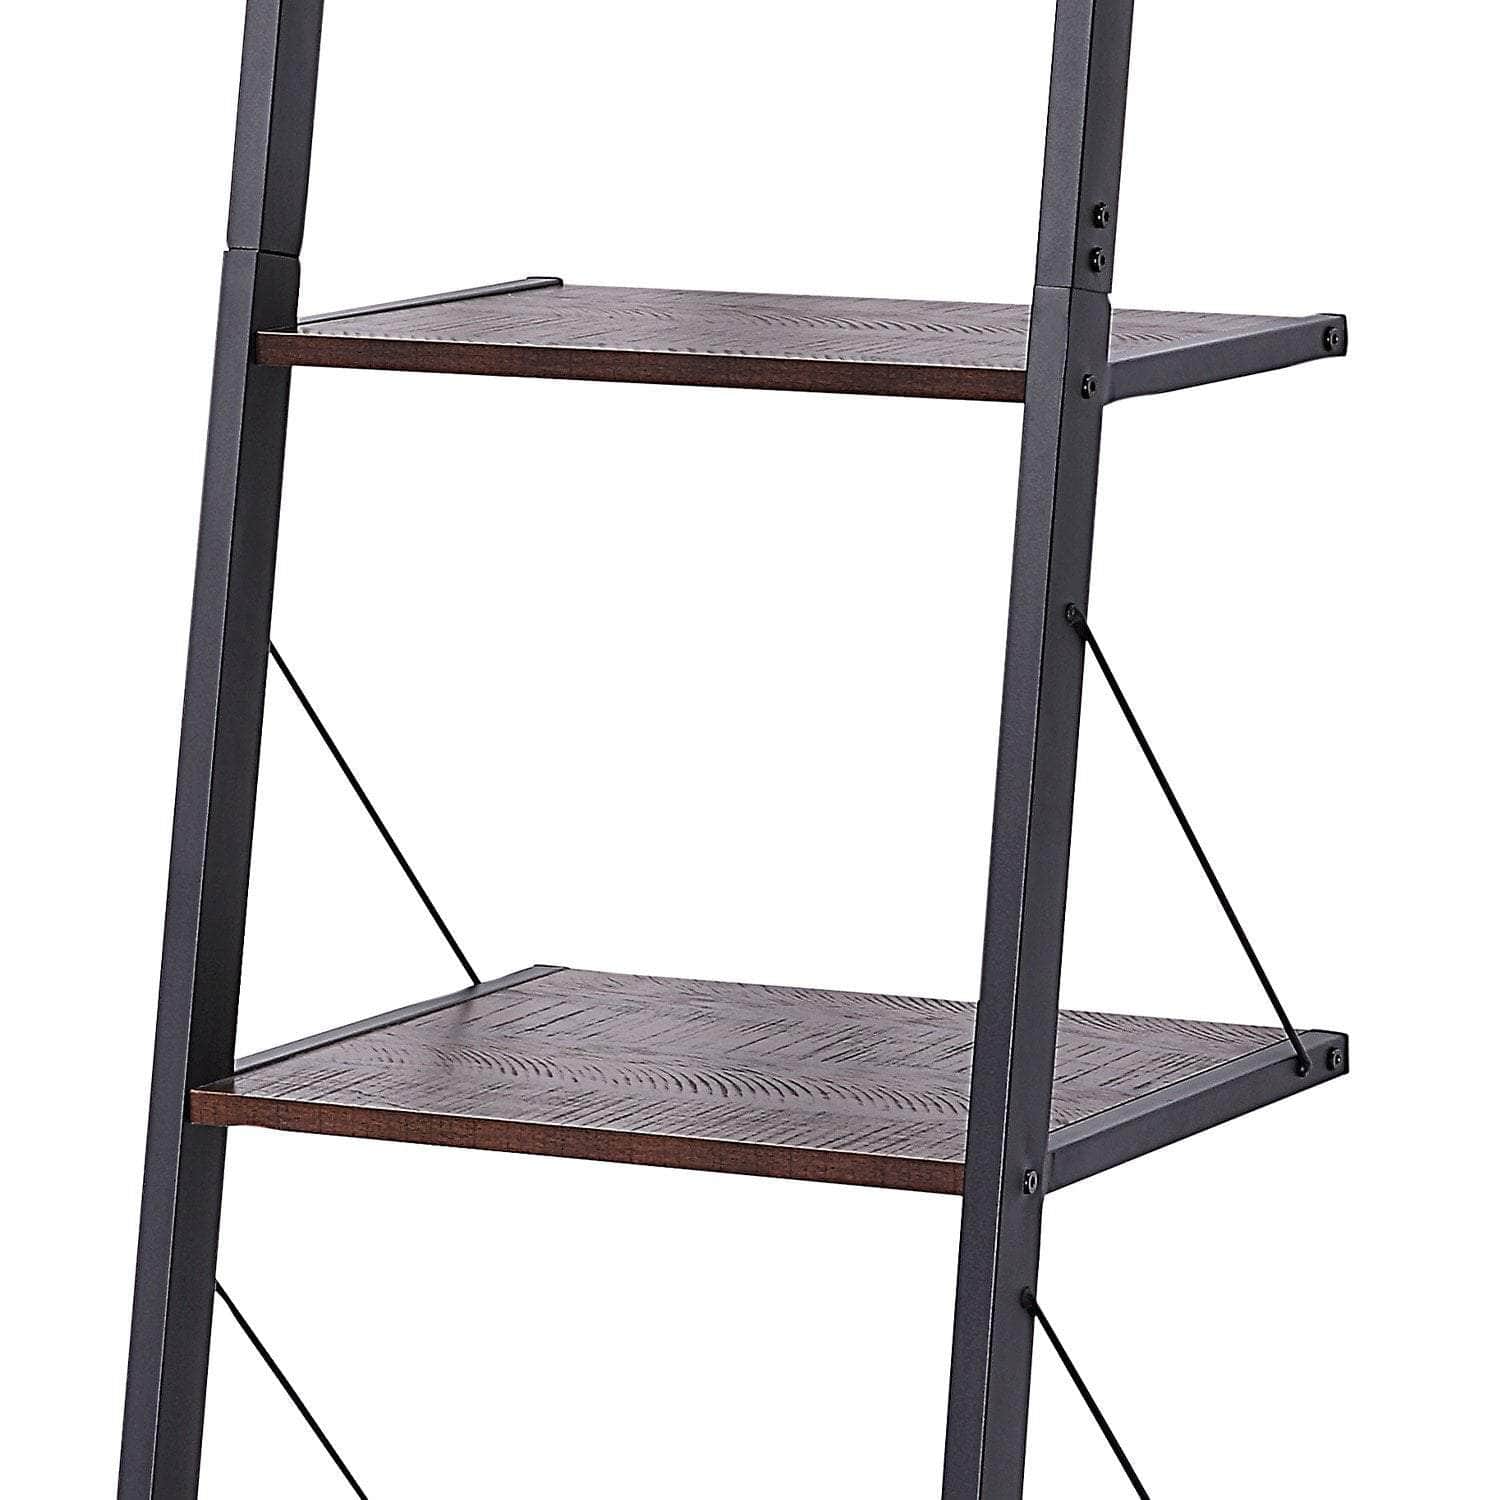 Elegant 5-Tier Ladder Shelf in Walnut